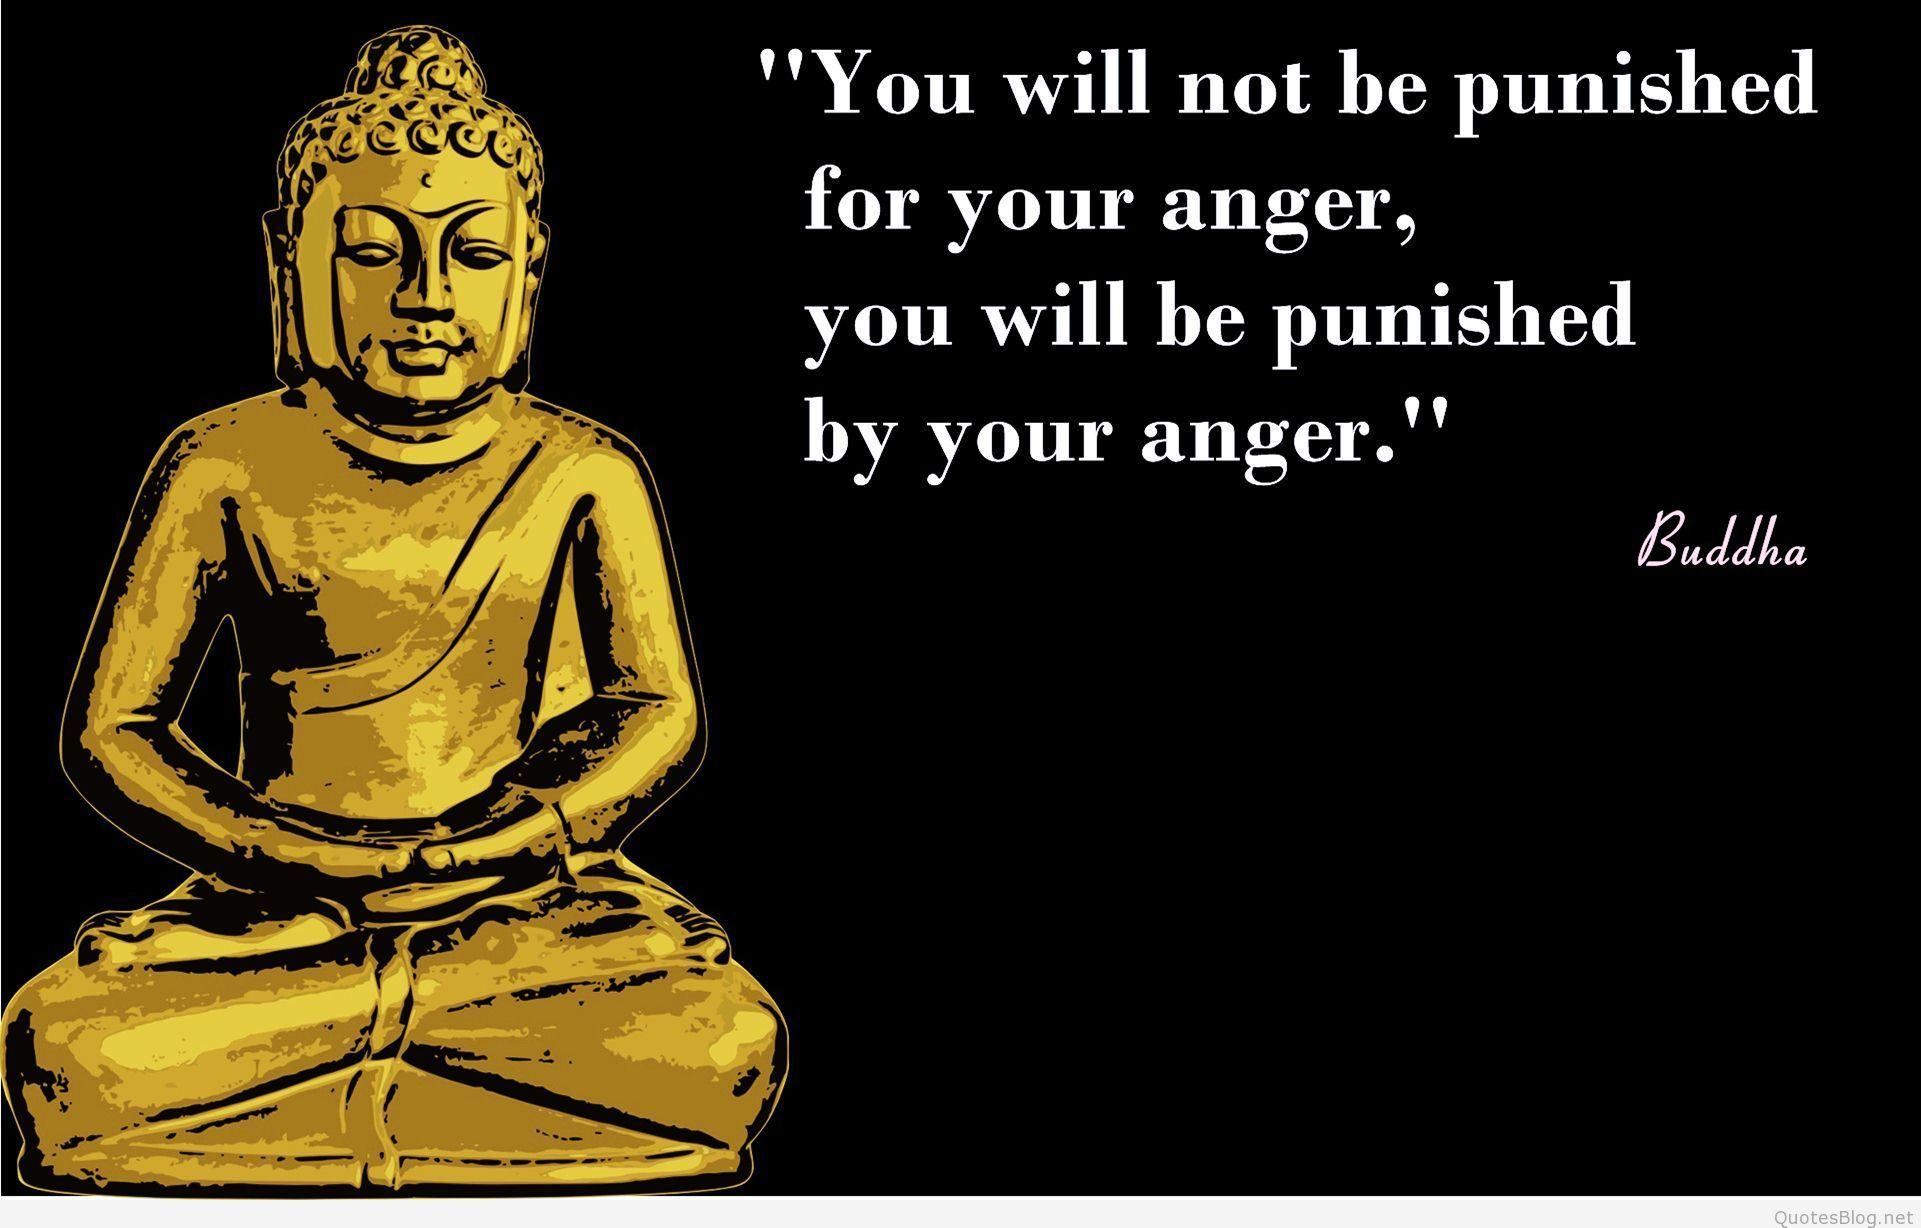 Inspirational Buddha quotes